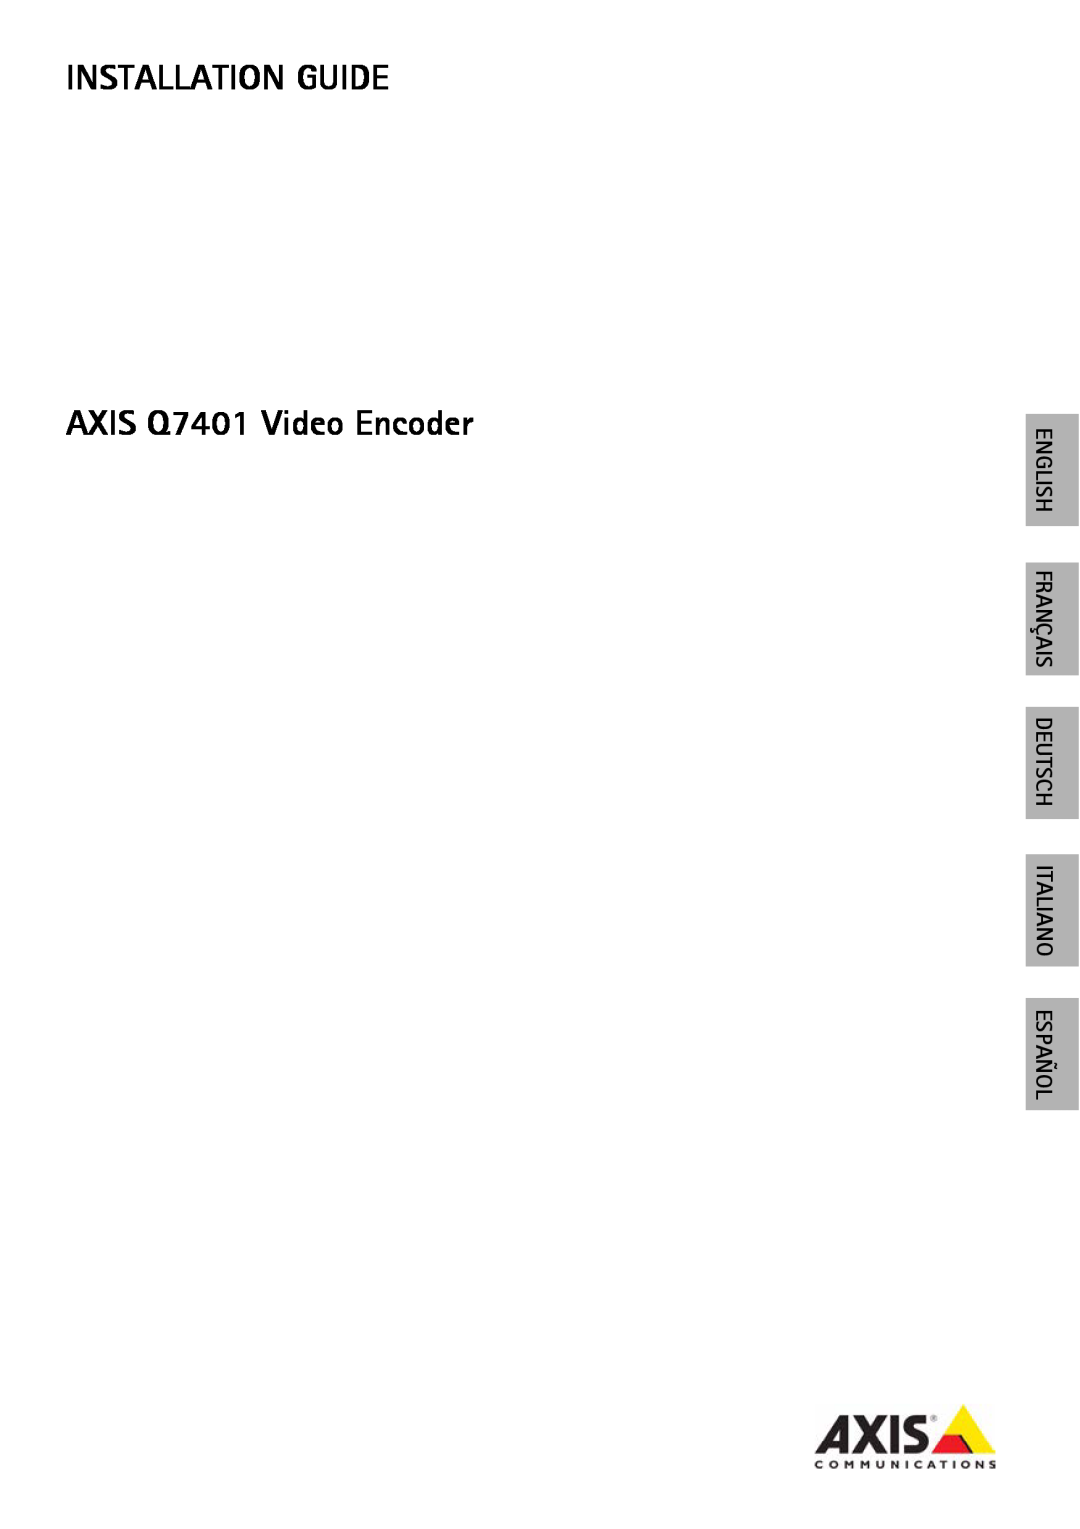 Axis Communications manual Installation Guide, AXIS Q7401 Video Encoder, Français, Italiano, English, Deutsch, Español 